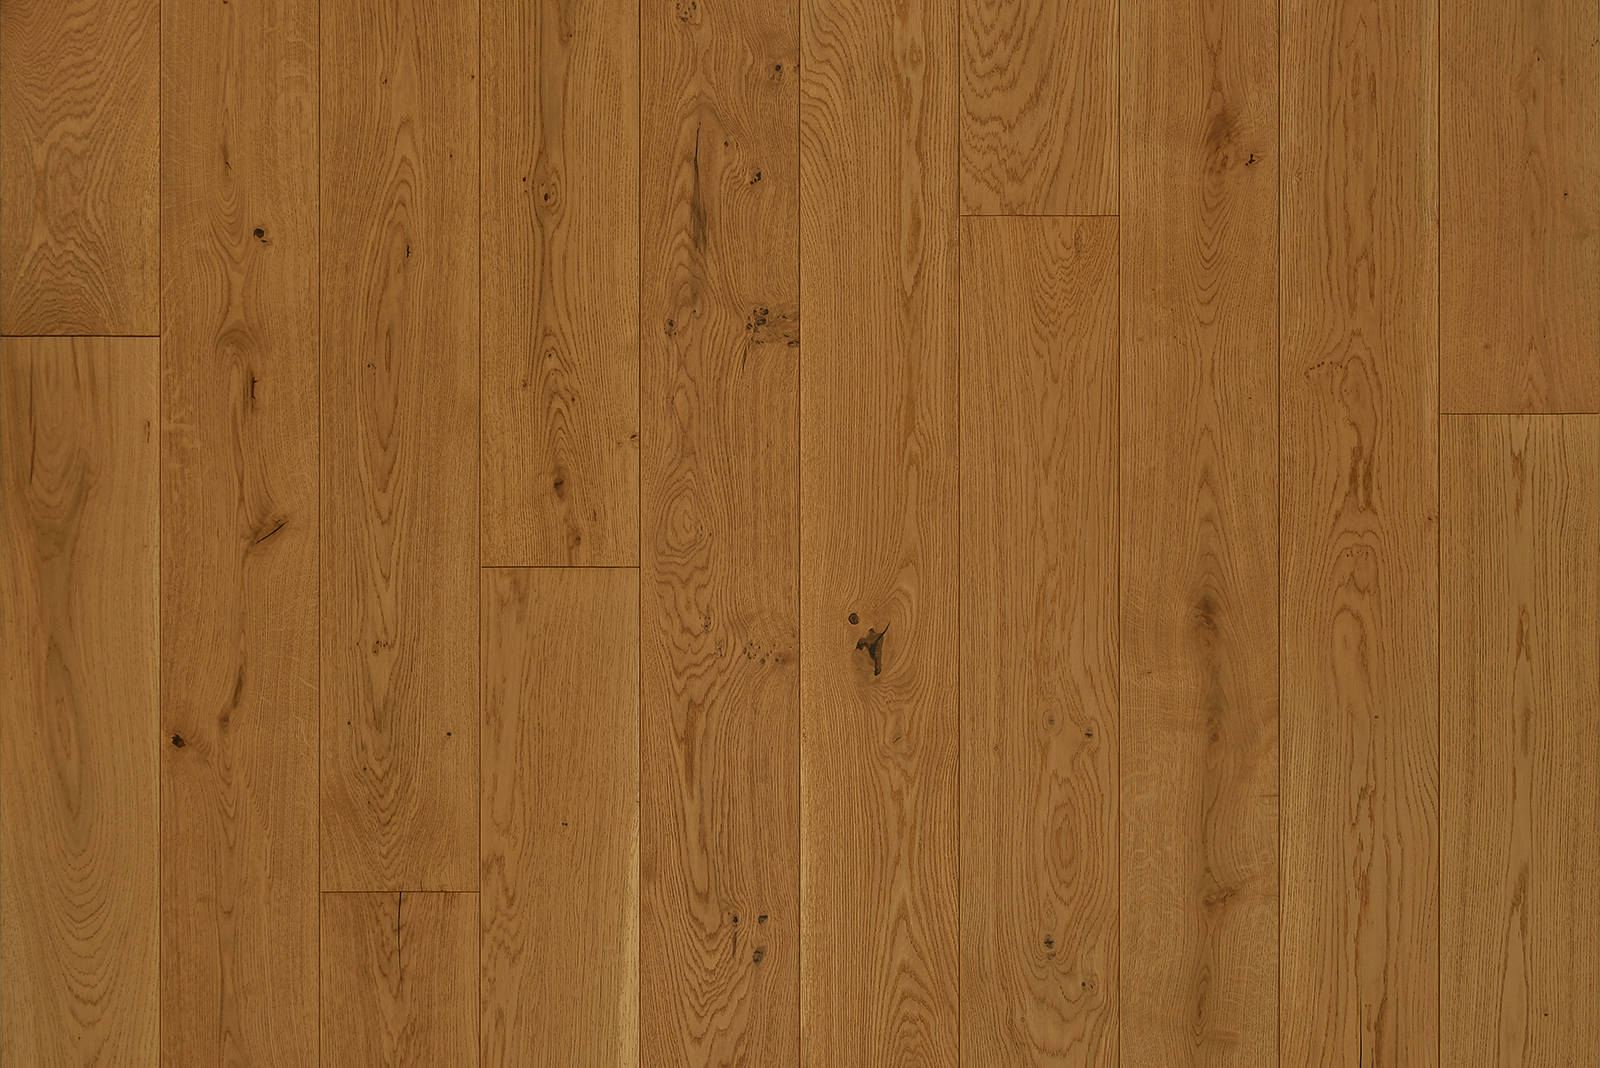 The Garrison Collection: Fine Hardwood Flooring